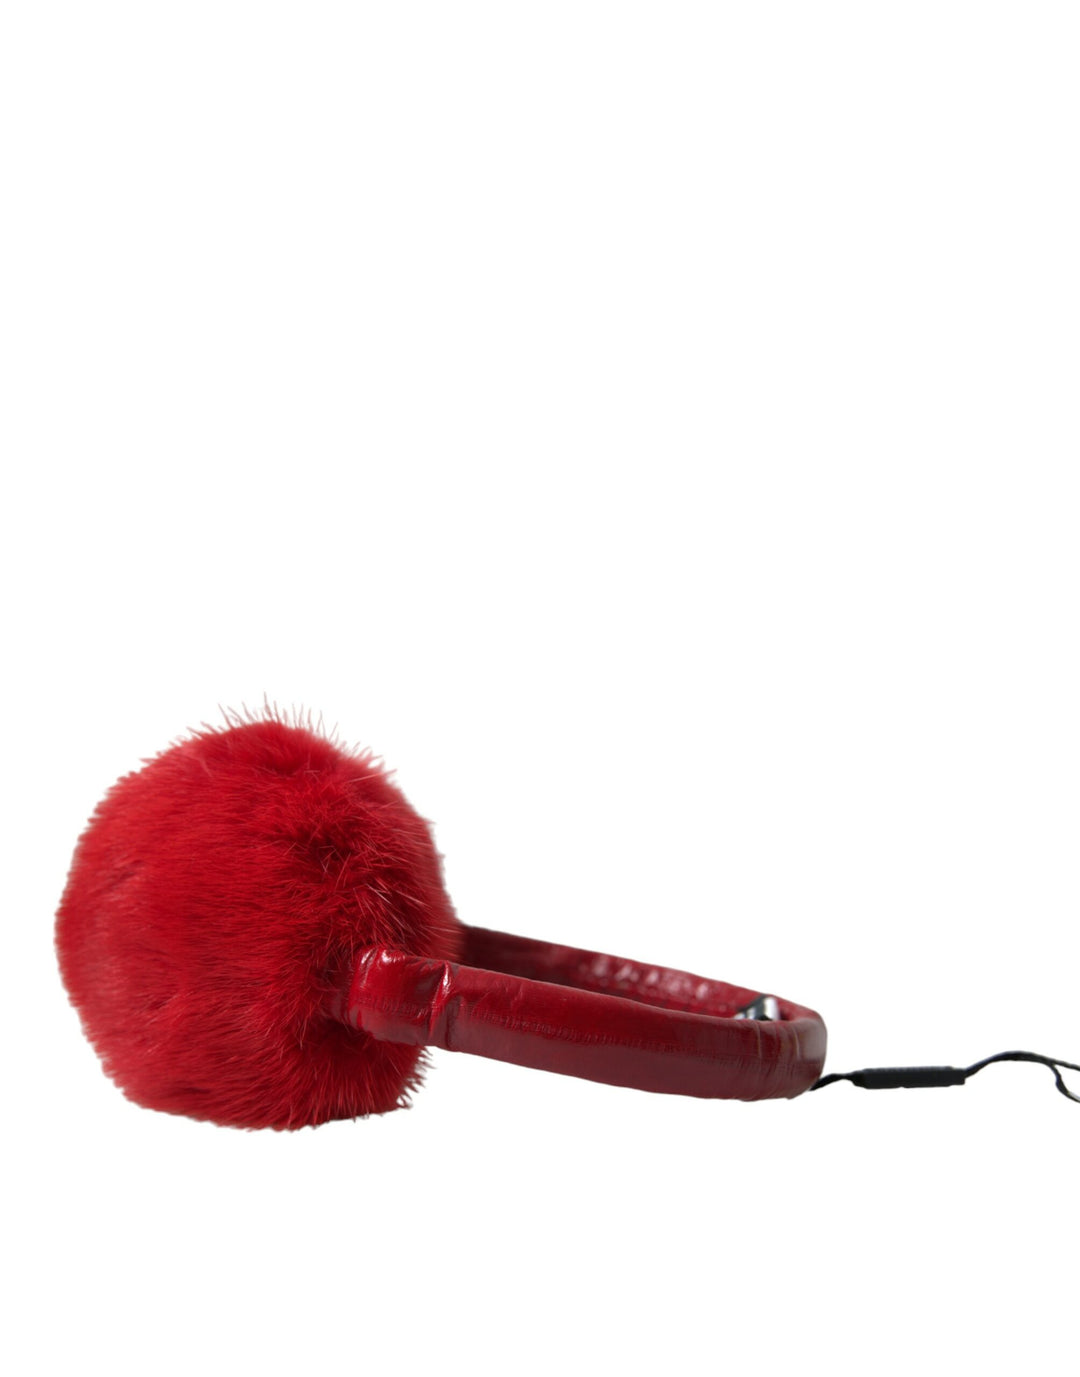 Dolce & Gabbana Red Mink Fur Winter Warmer Headband Ear Muffs